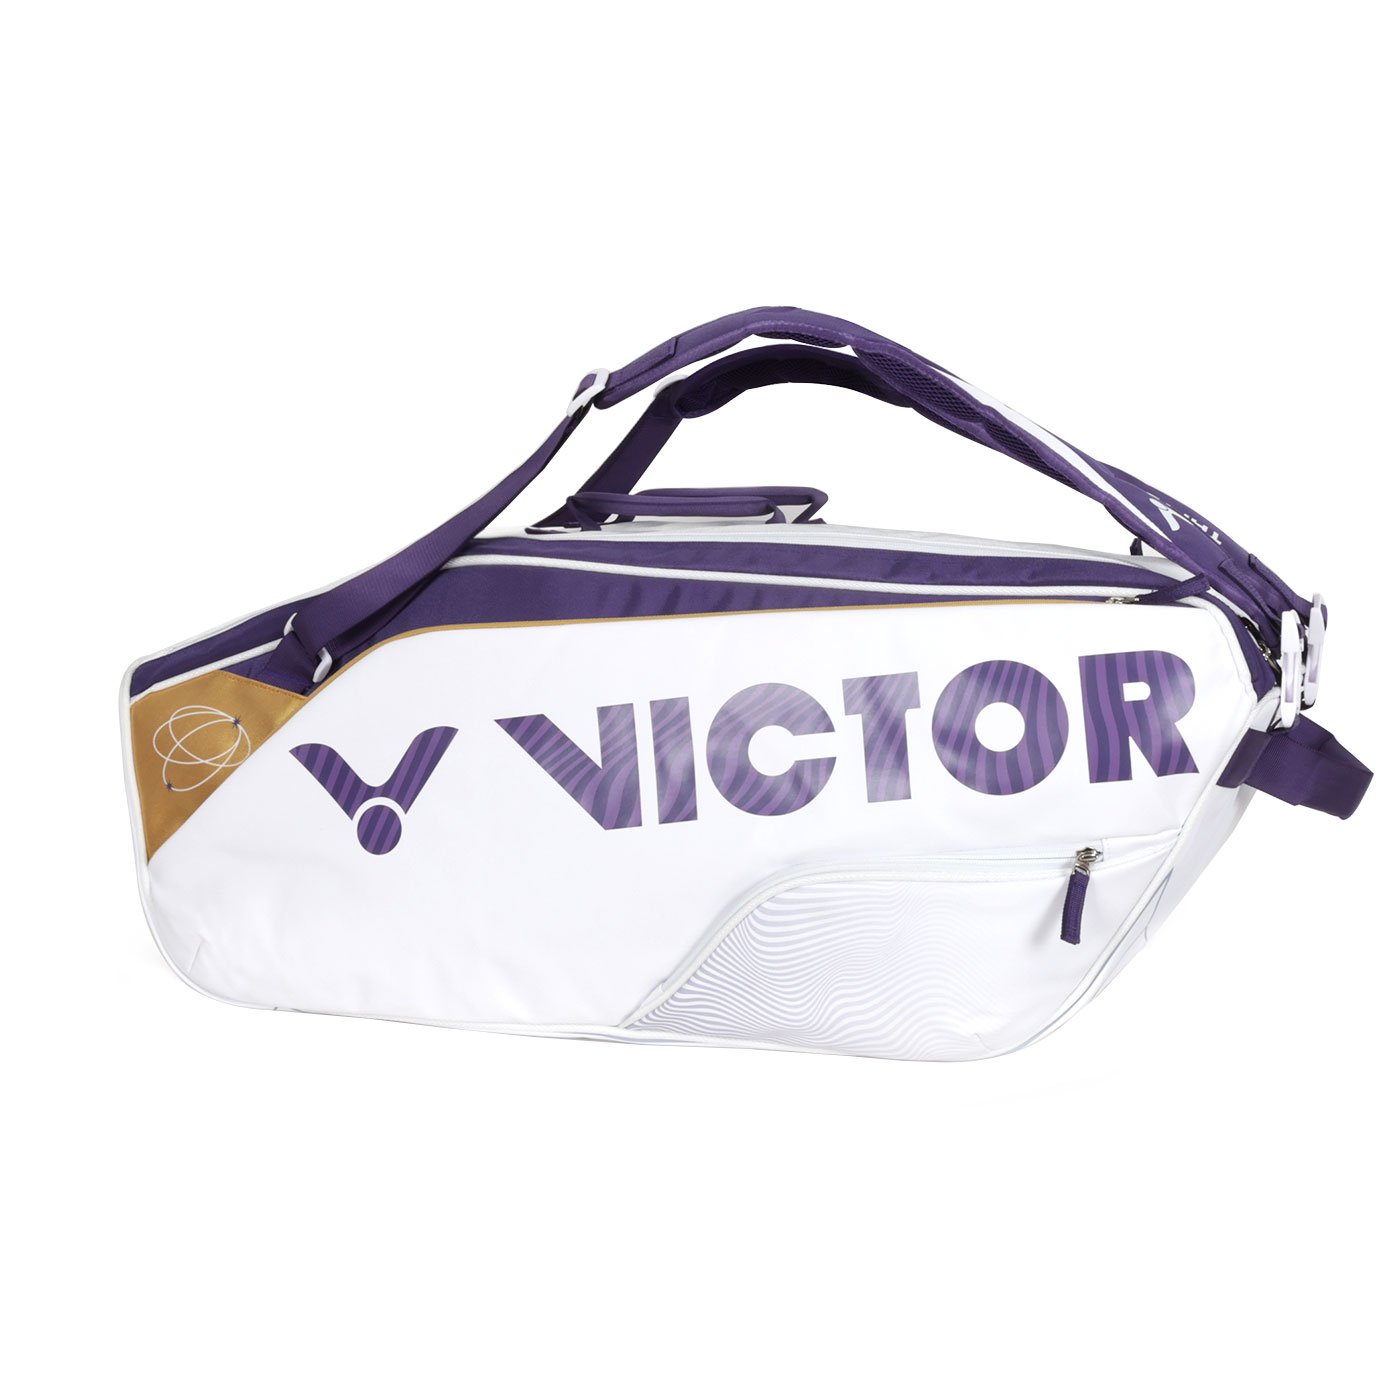 VICTOR 6支裝羽拍包  BR9213TTY-AJ - 白紫金